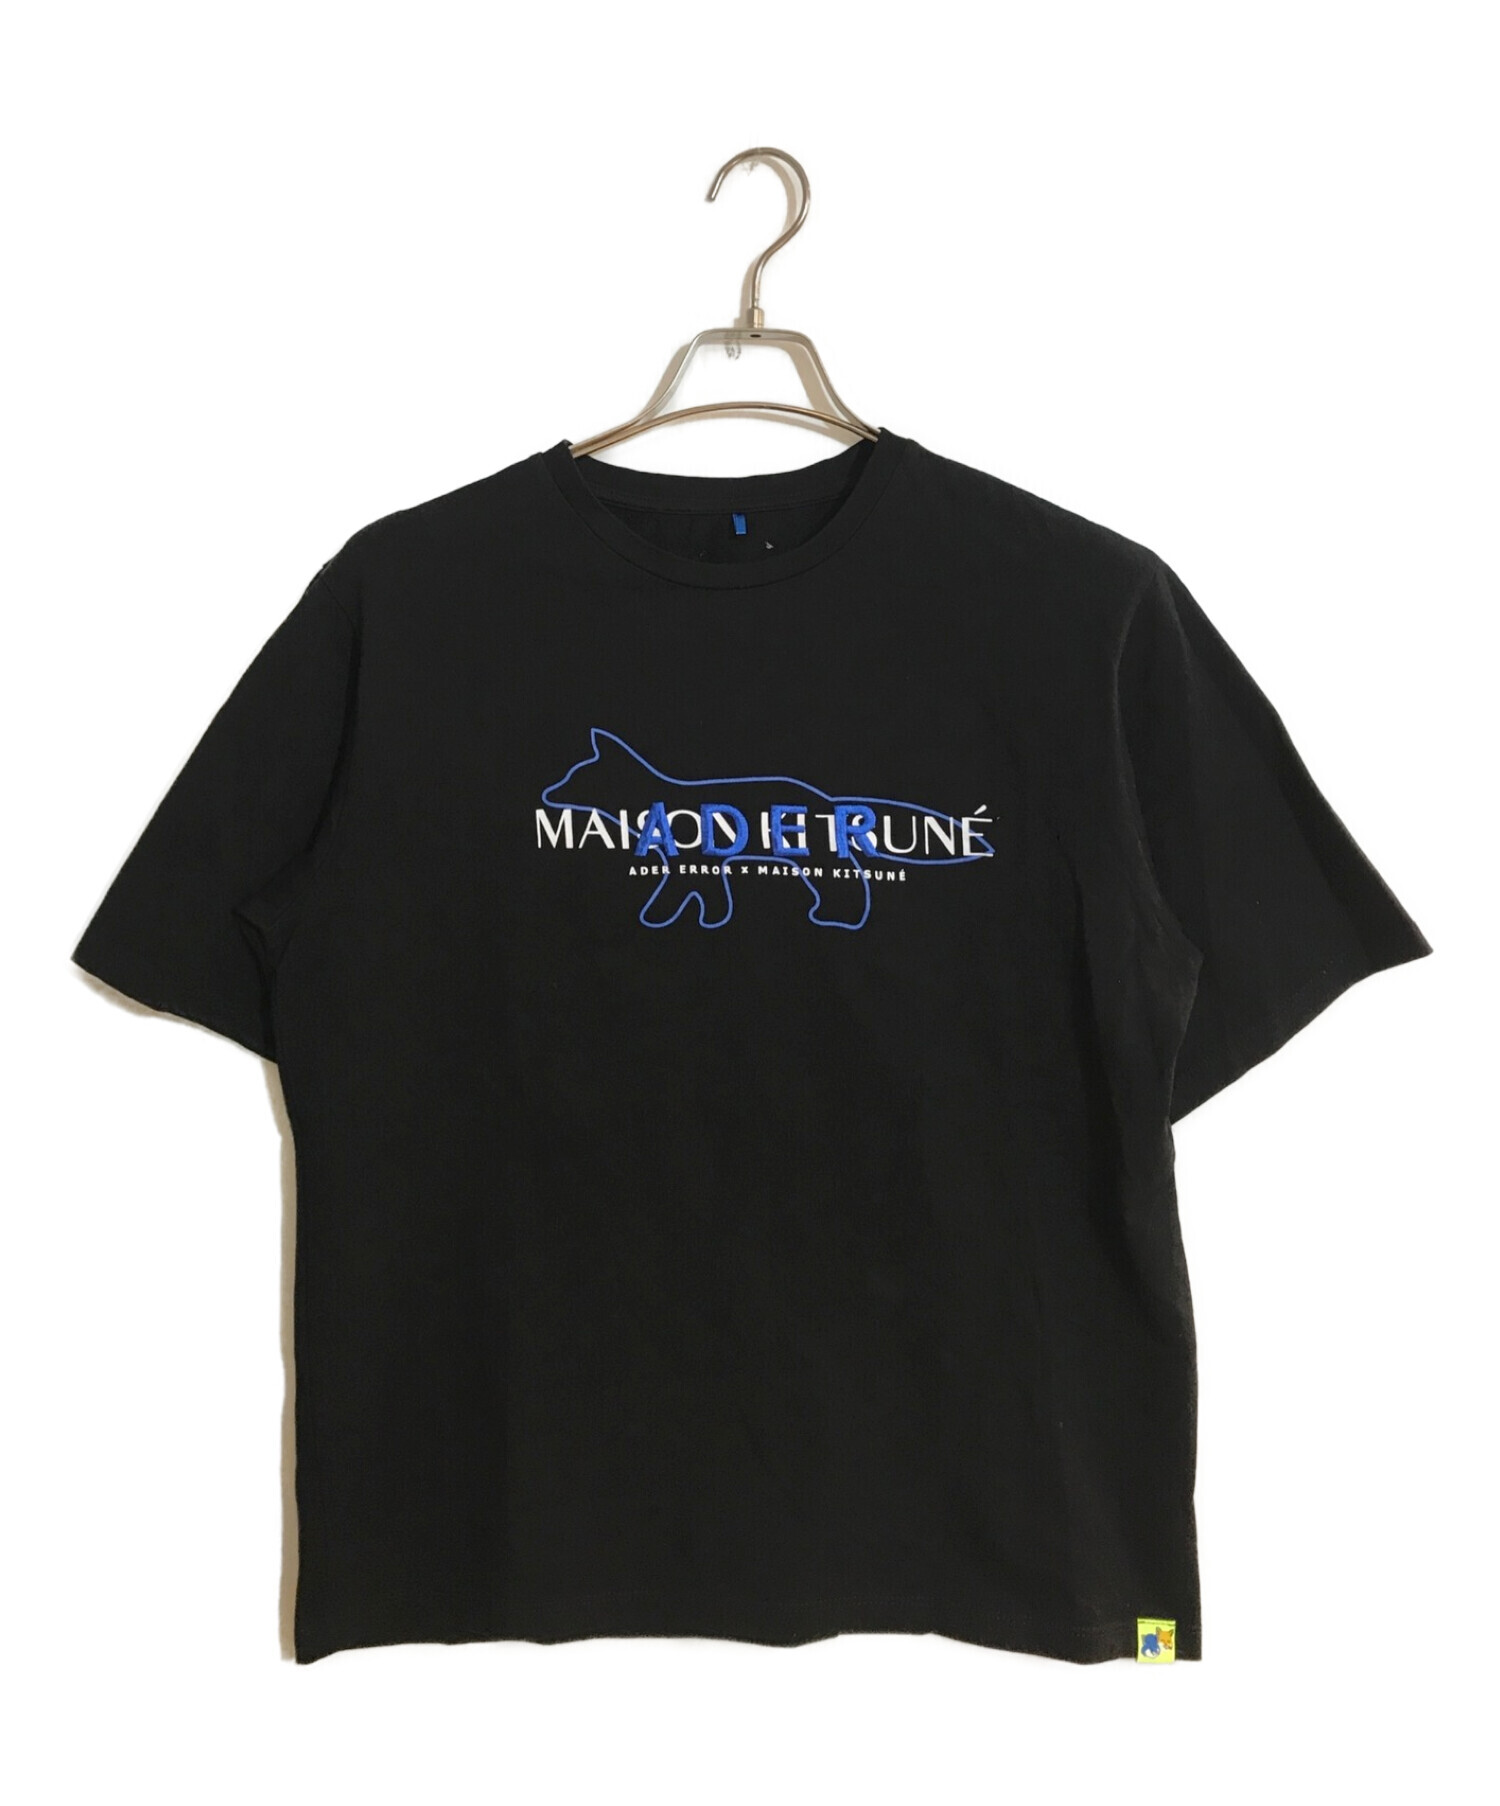 ADER error (アーダーエラー) MAISON KITSUNE (メゾンキツネ) kitsune layout t-shirt ブラック  サイズ:SIZE A3